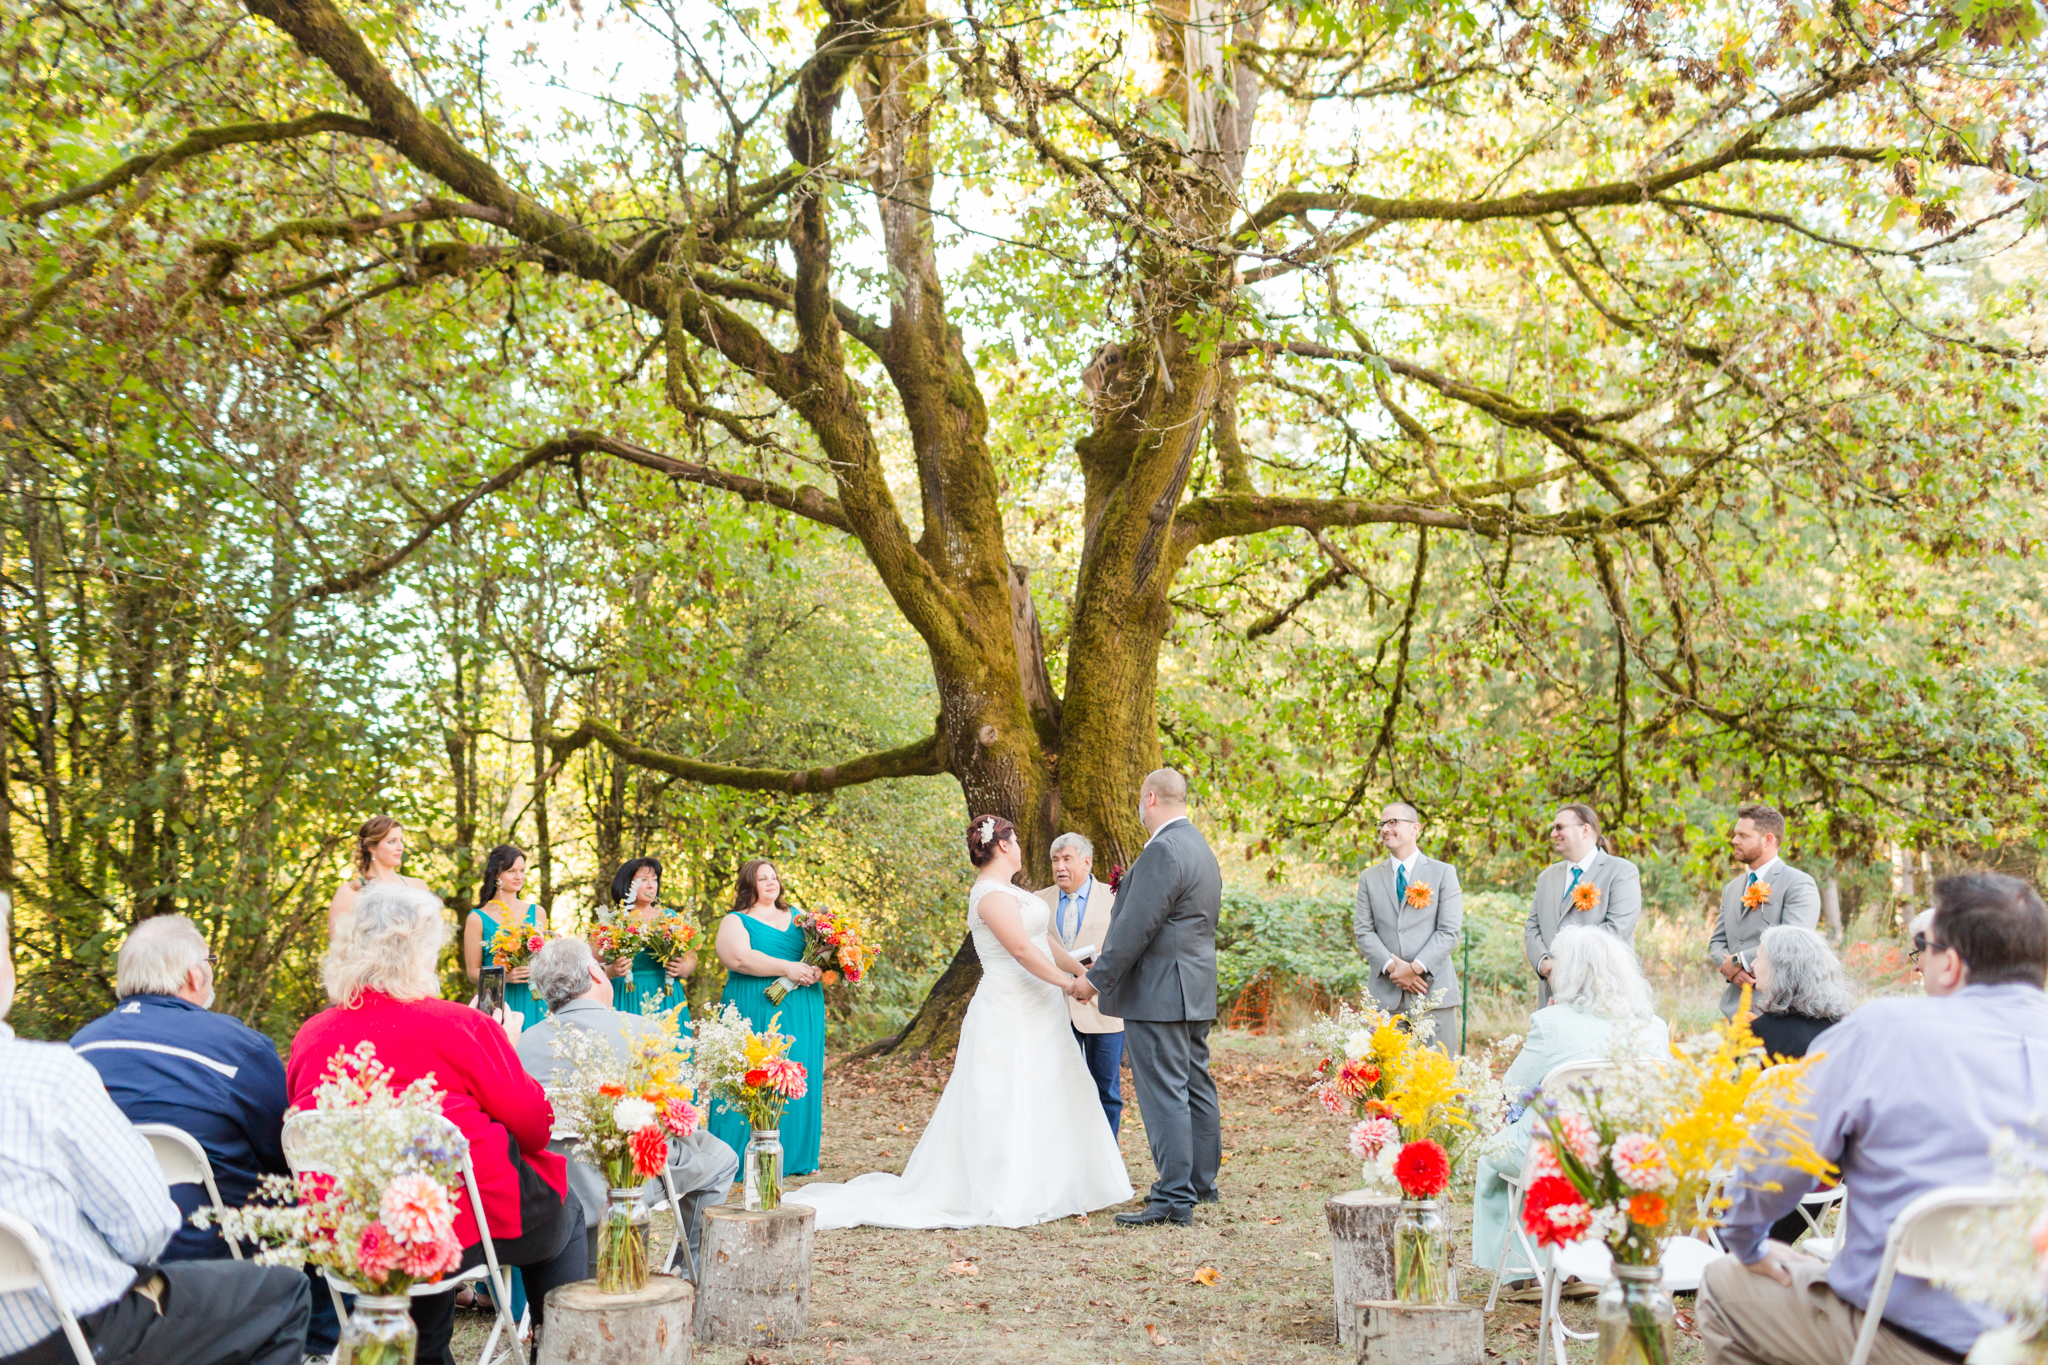 Champoeg State Park wedding under an oak tree in Newberg - Hillsboro wedding photographer